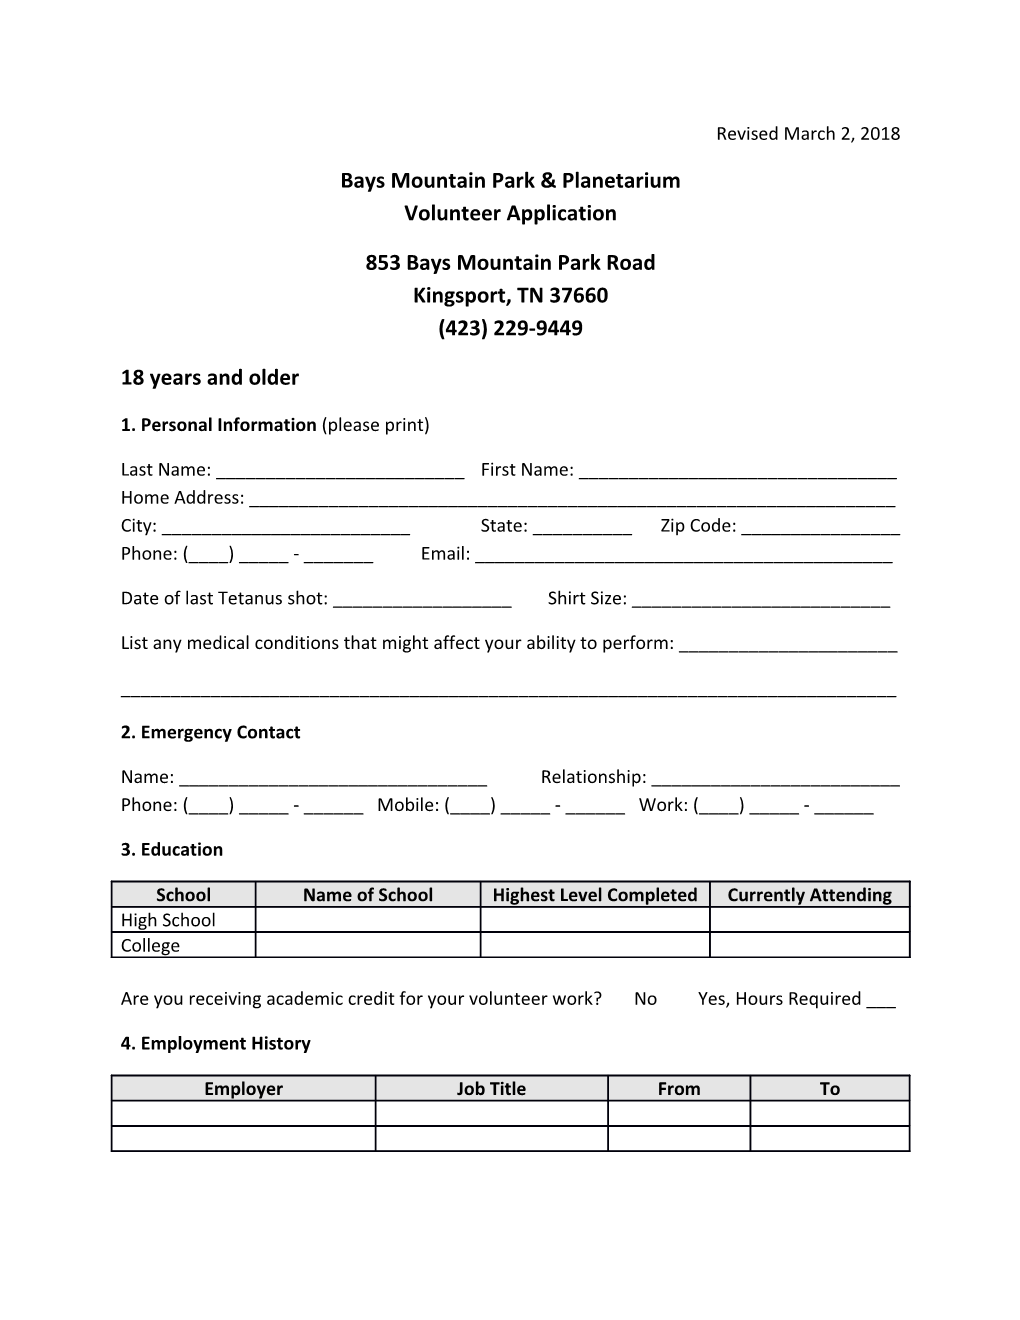 Bays Mountain Park & Planetarium Volunteer Application